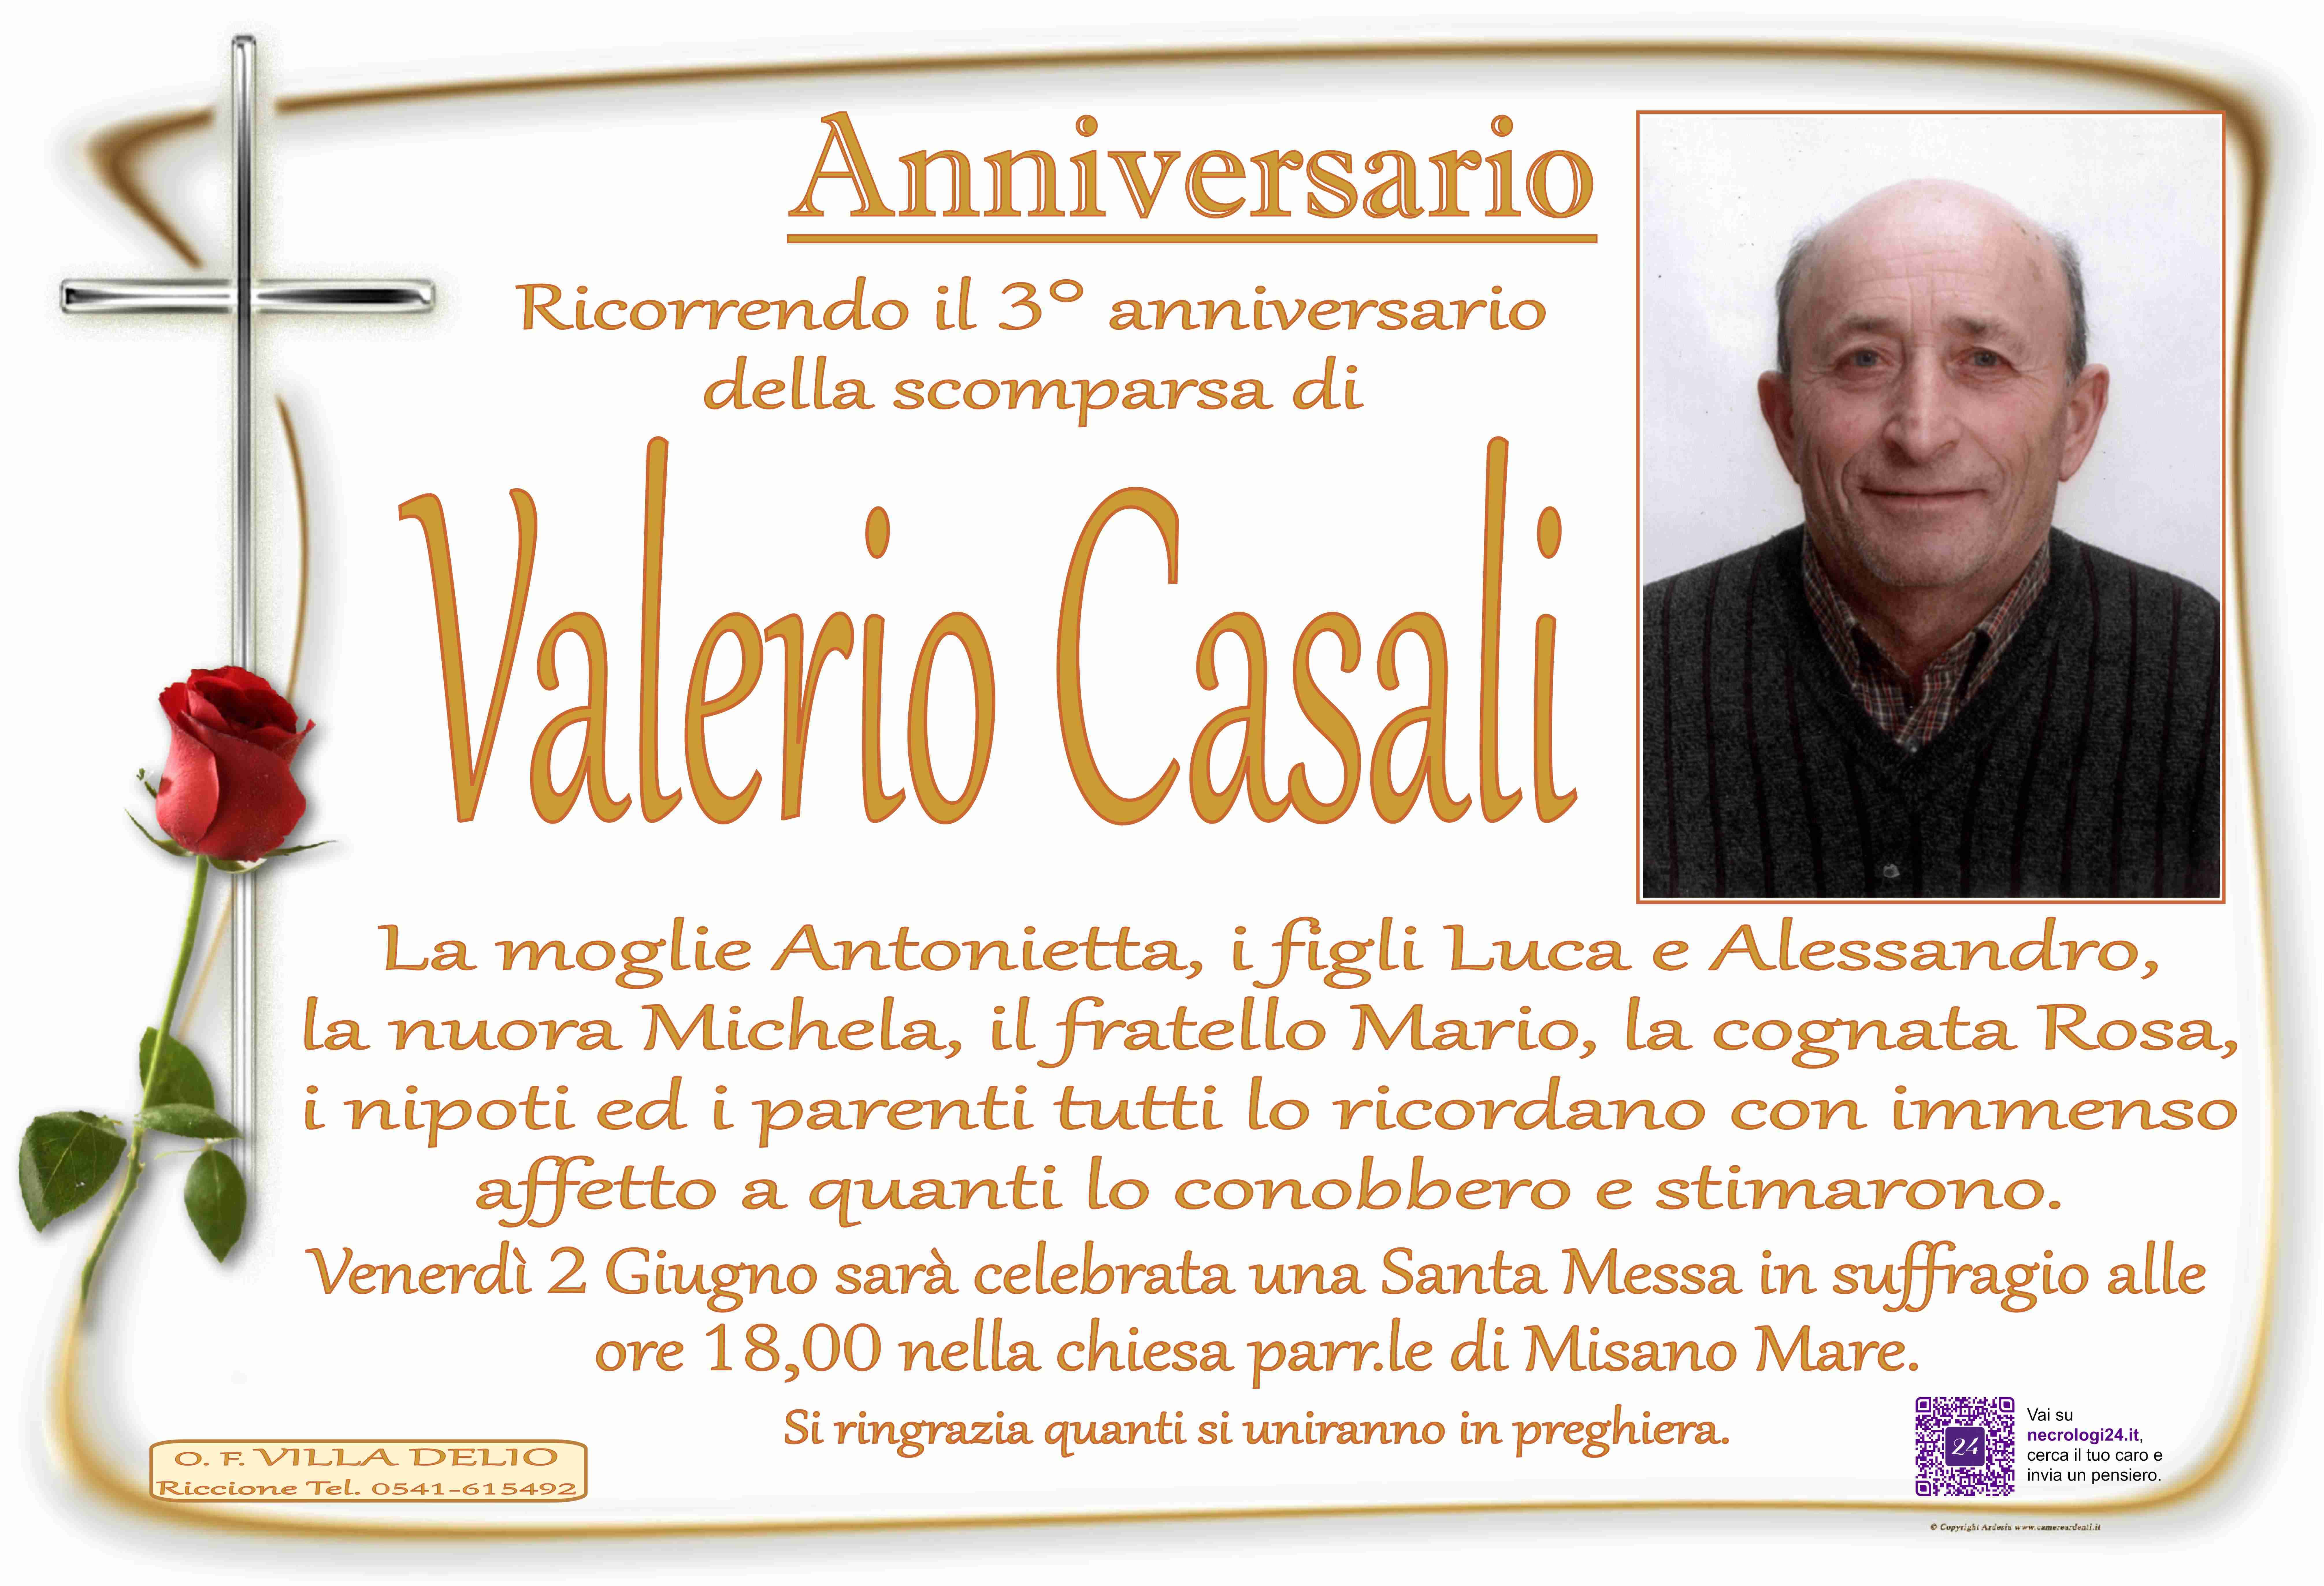 Valerio Casali